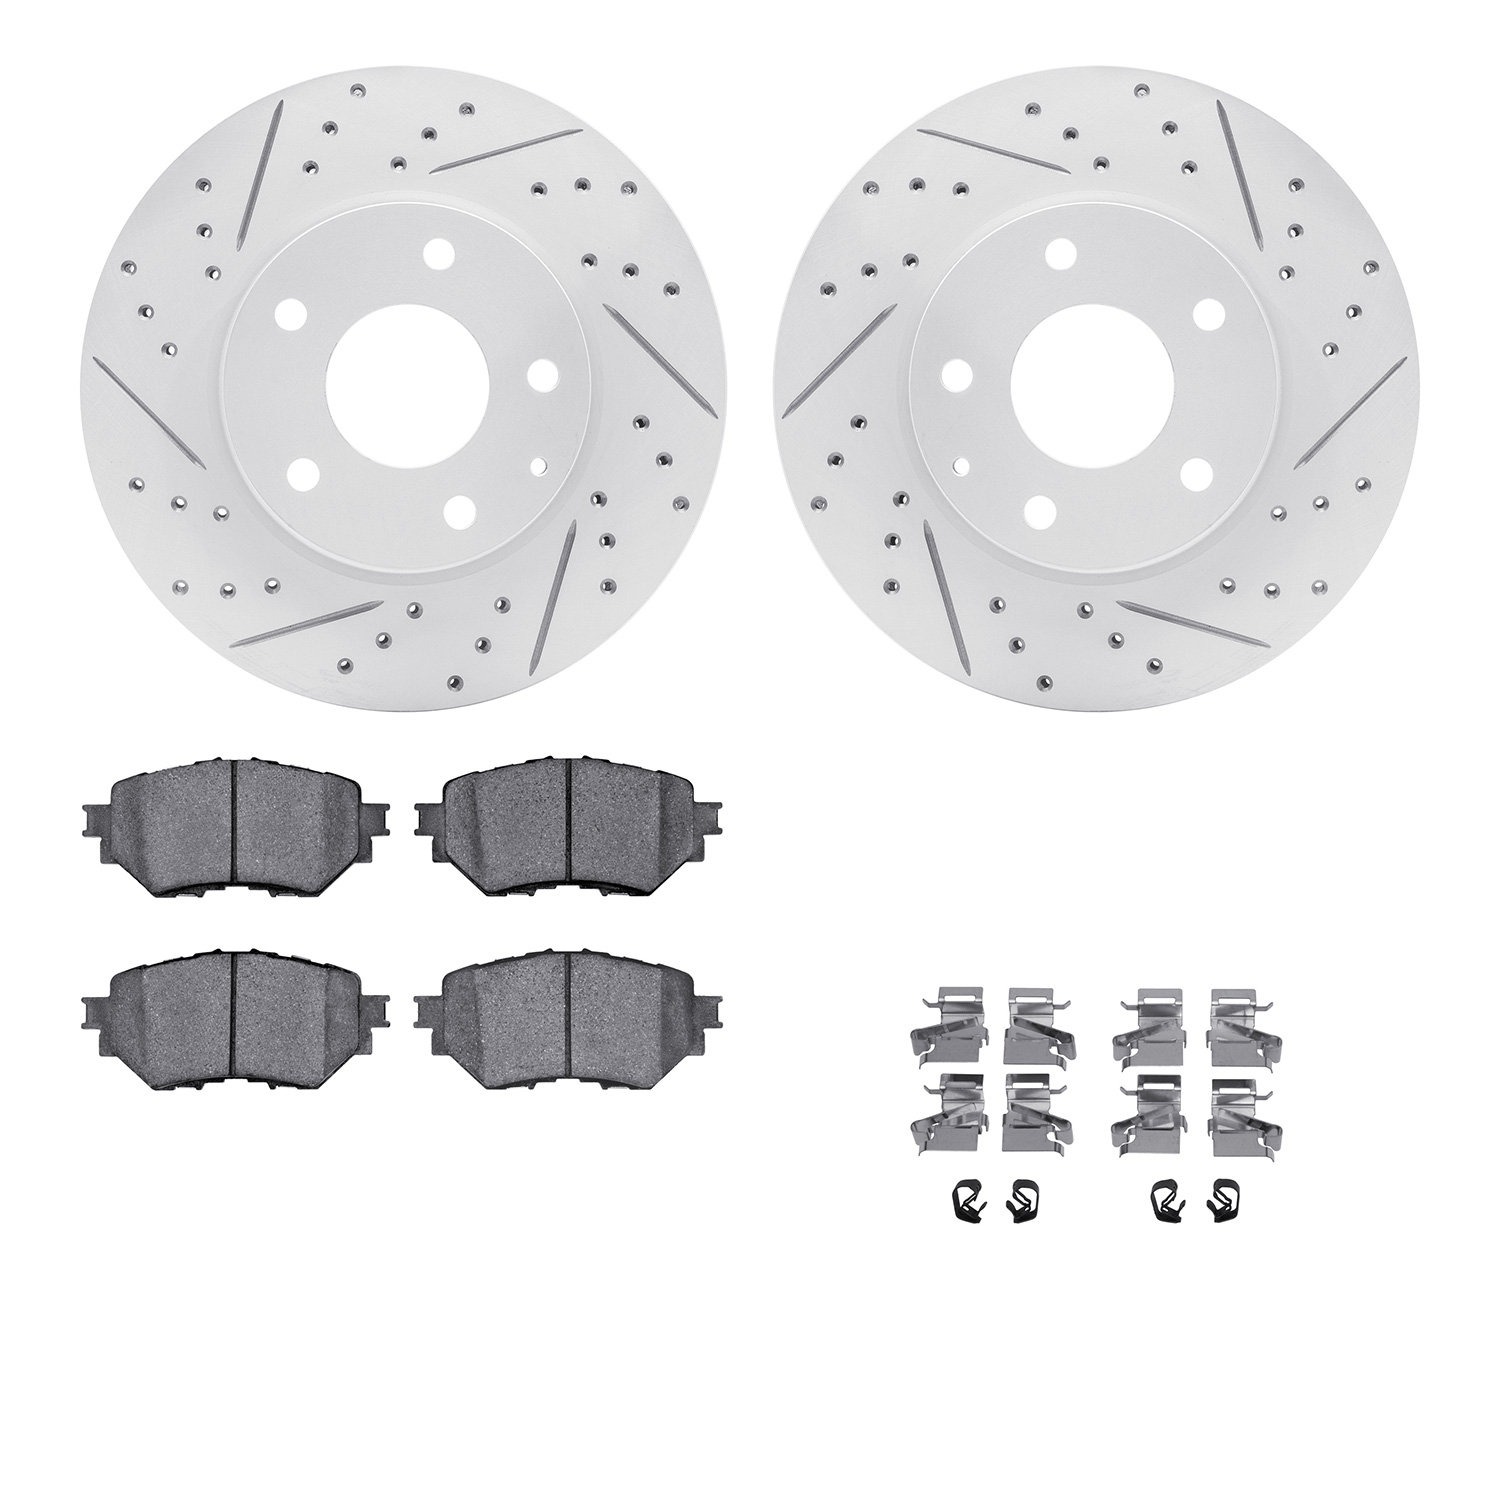 2512-80025 Geoperformance Drilled/Slotted Rotors w/5000 Advanced Brake Pads Kit & Hardware, 2014-2018 Ford/Lincoln/Mercury/Mazda